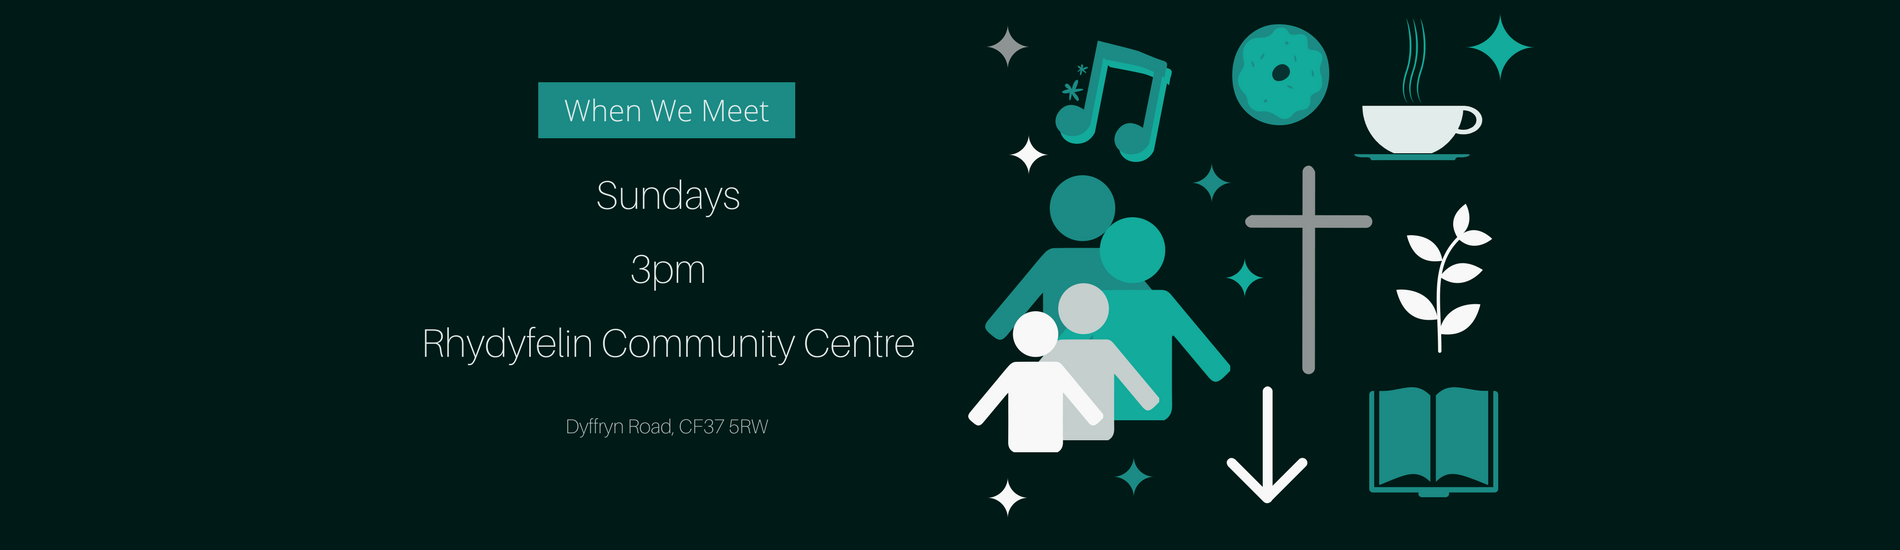 We meet Sundays 3pm at Rhydyfelin Community Centre